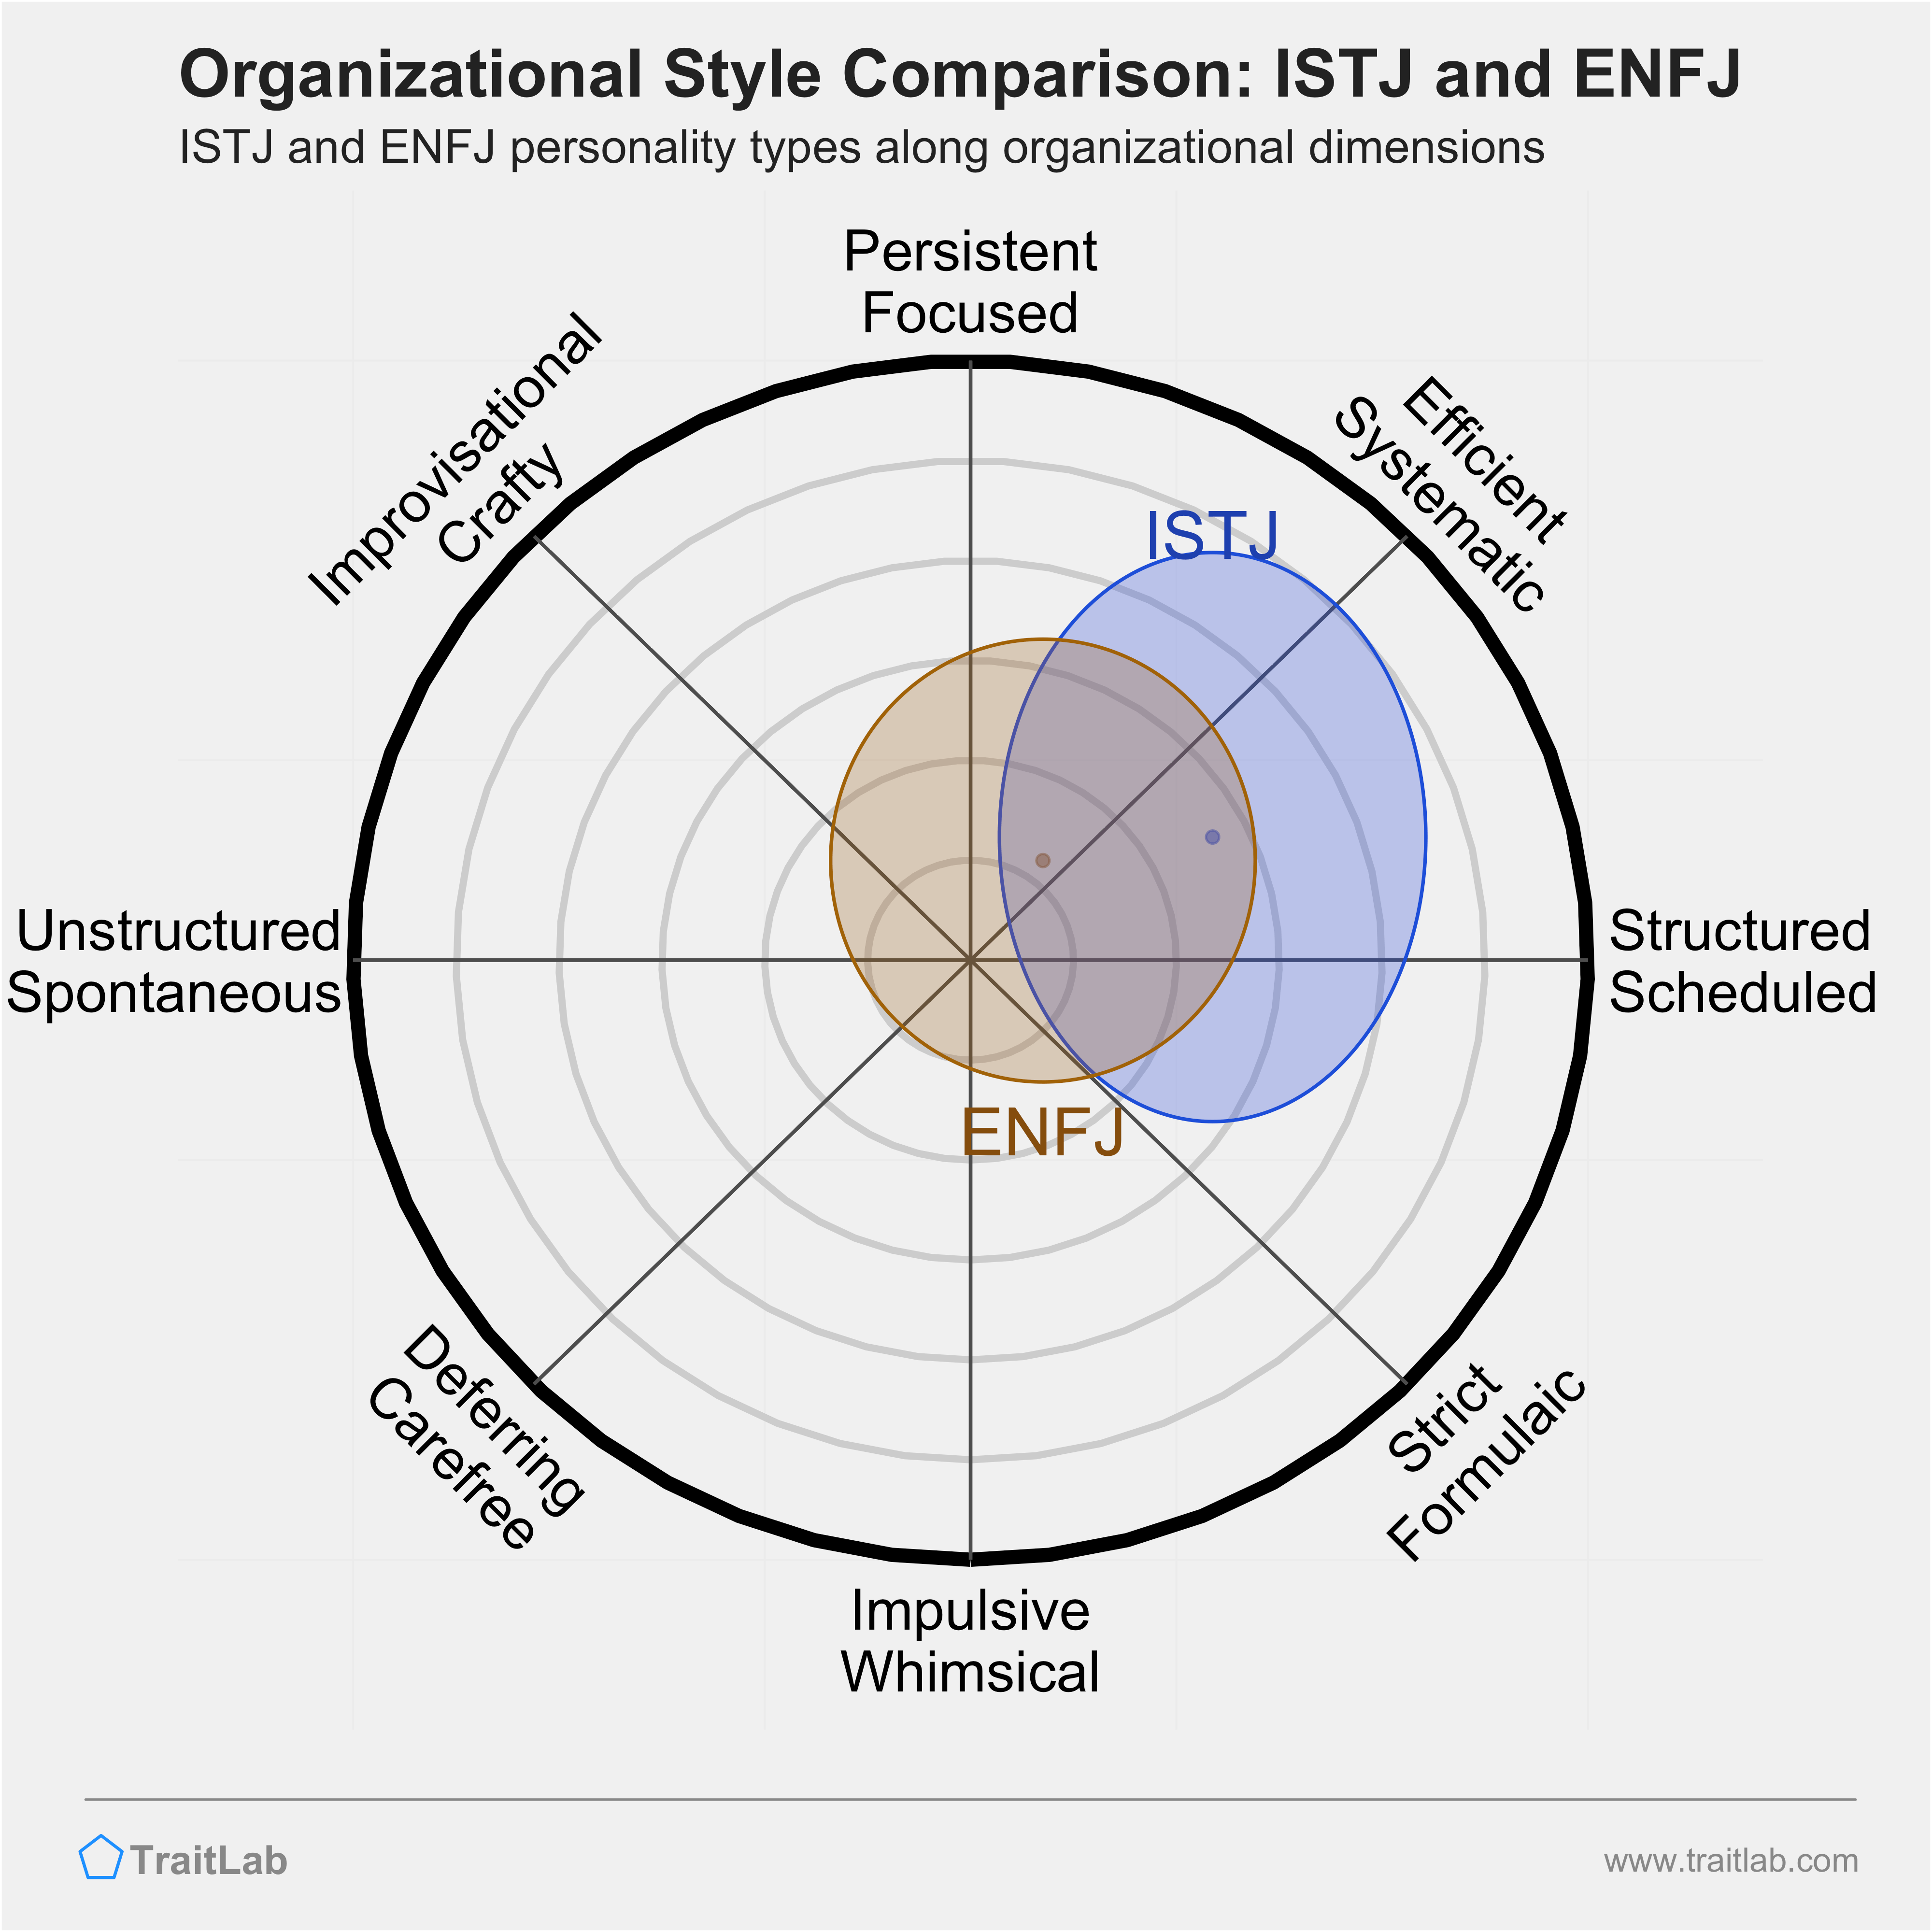 ISTJ and ENFJ comparison across organizational dimensions